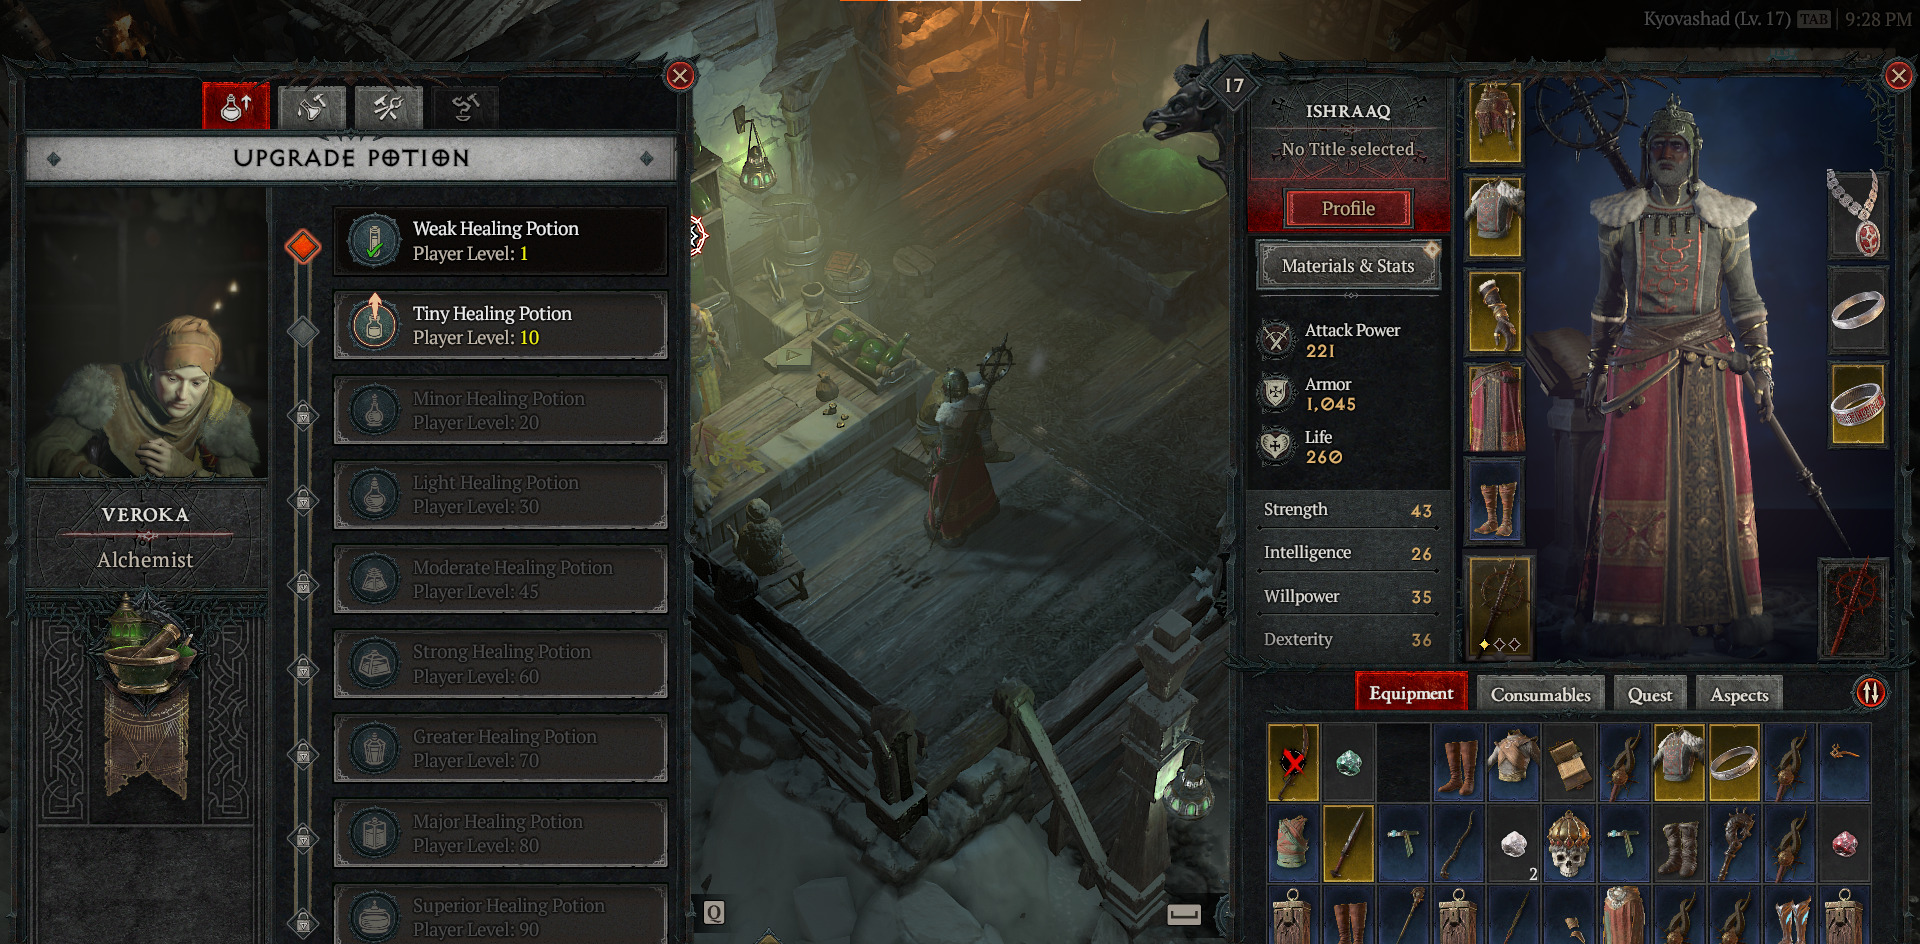 A screenshot showing the upgrade potion screen in Diablo 4